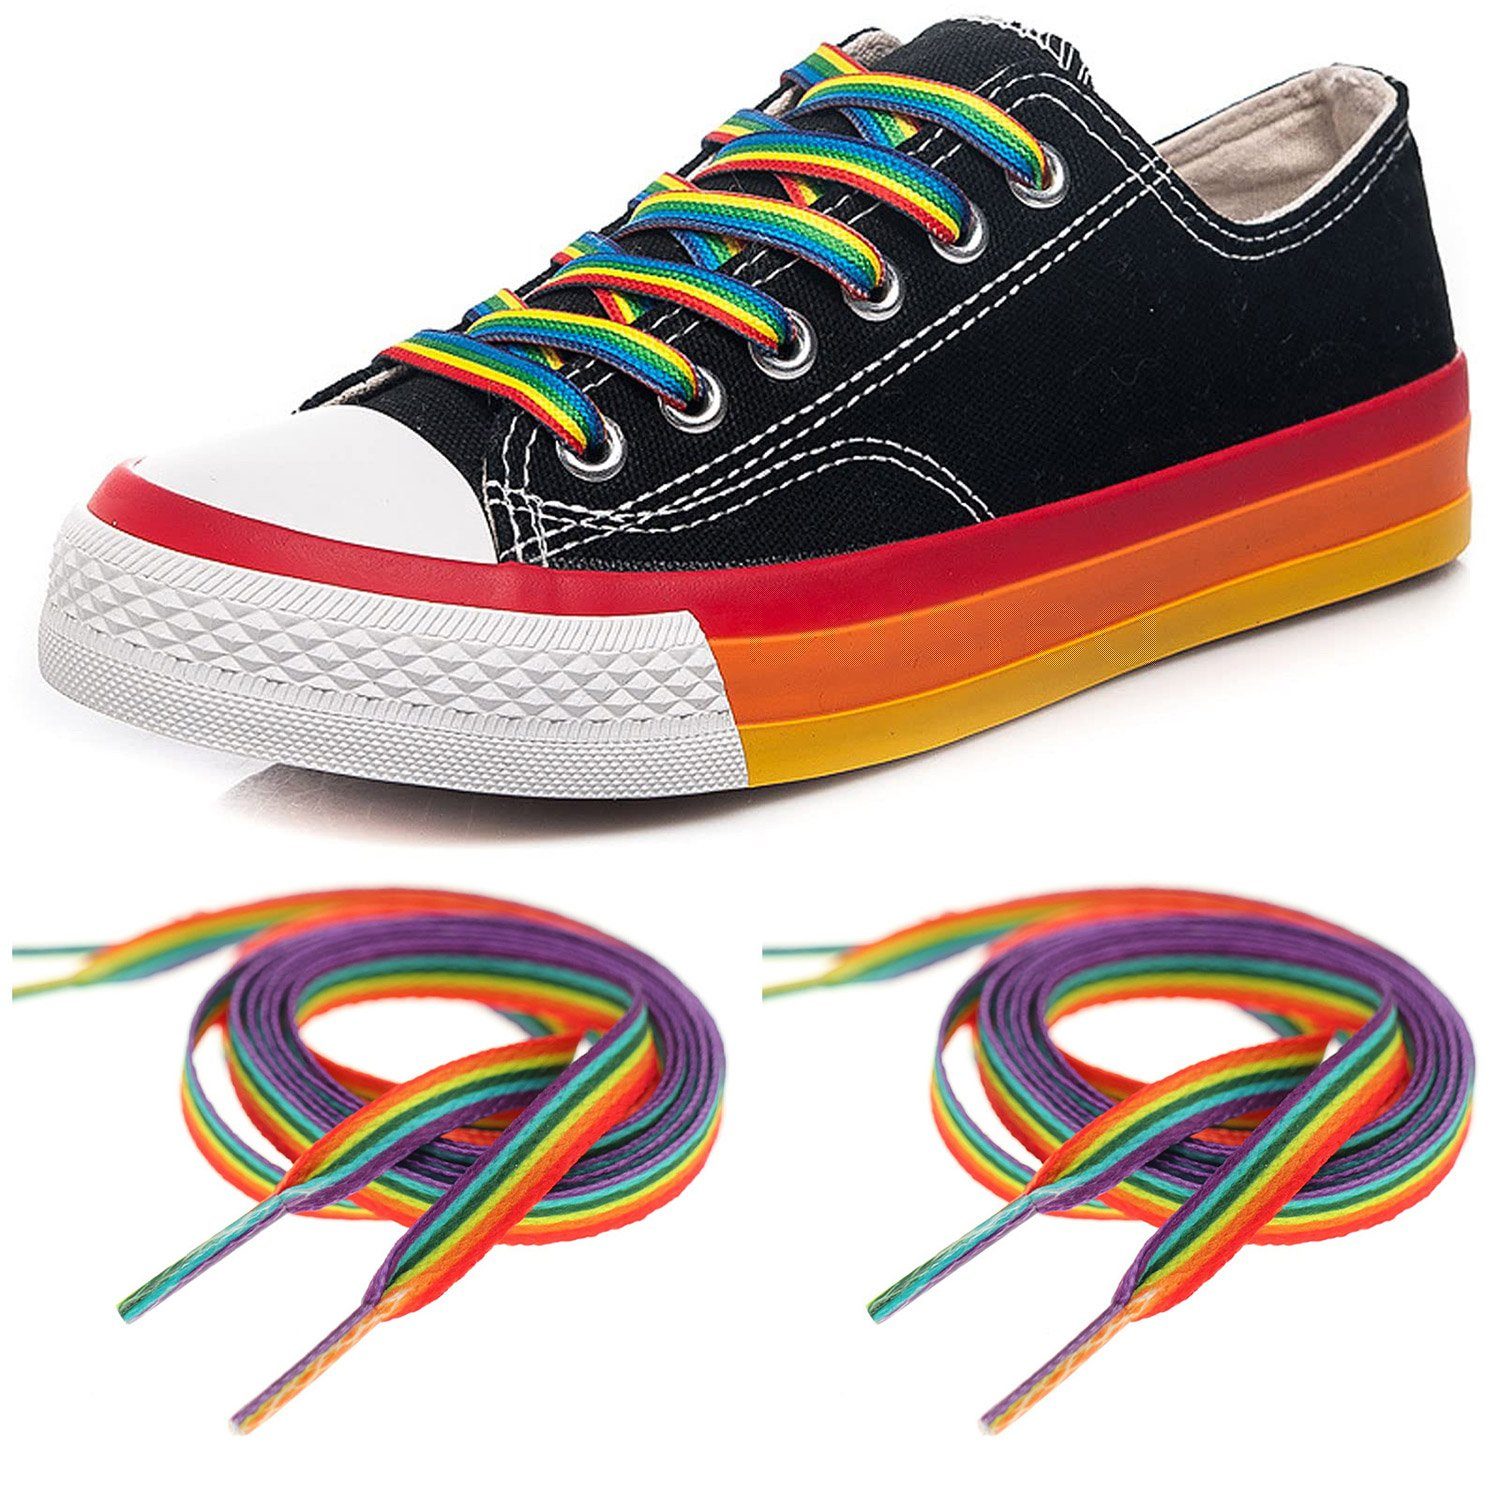 2 Schnürsenkel Daisred Elastische Regenbogen Paare Schuhbänder Bunte